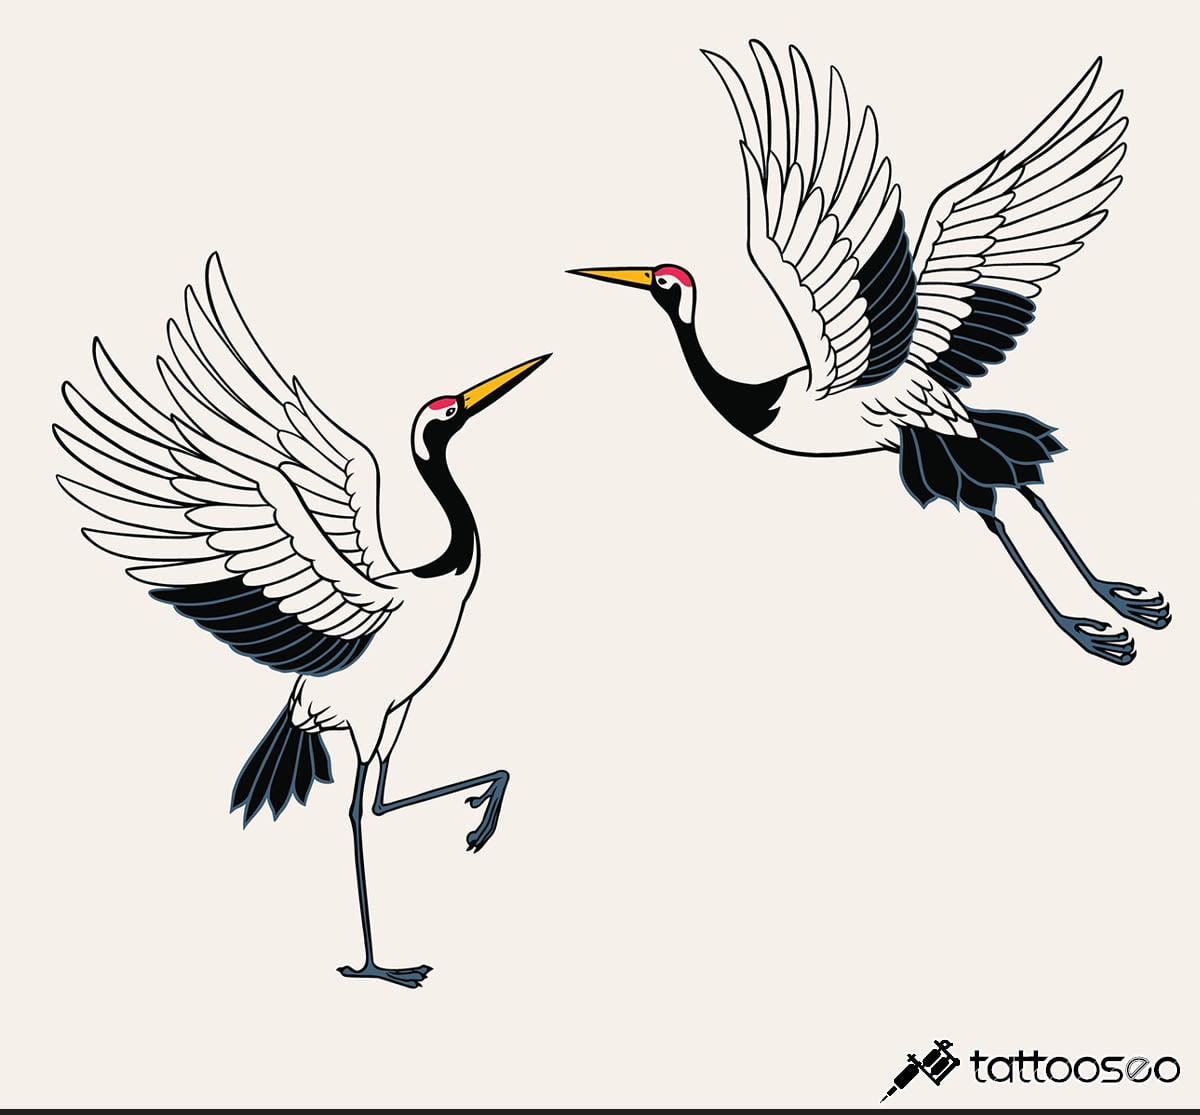 Heron tattoo meanings